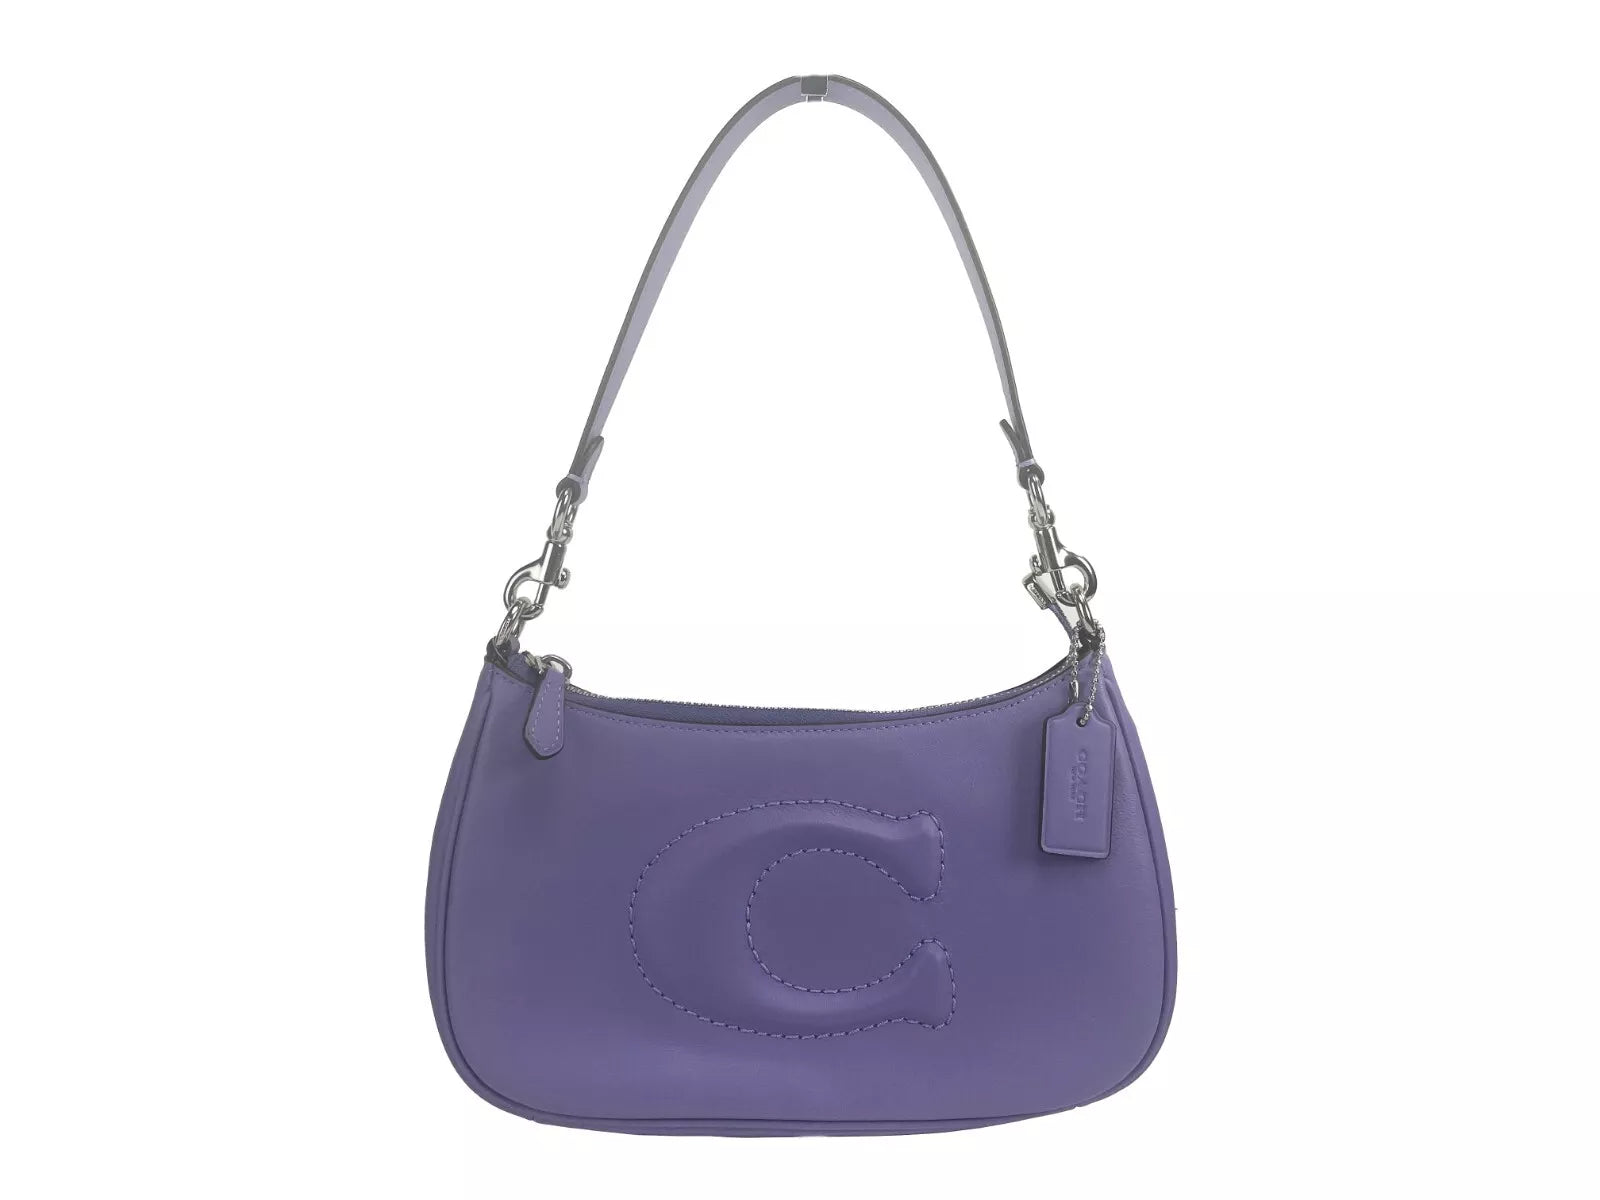 Teri Smooth Leather Crossbody Bag Purse Purple